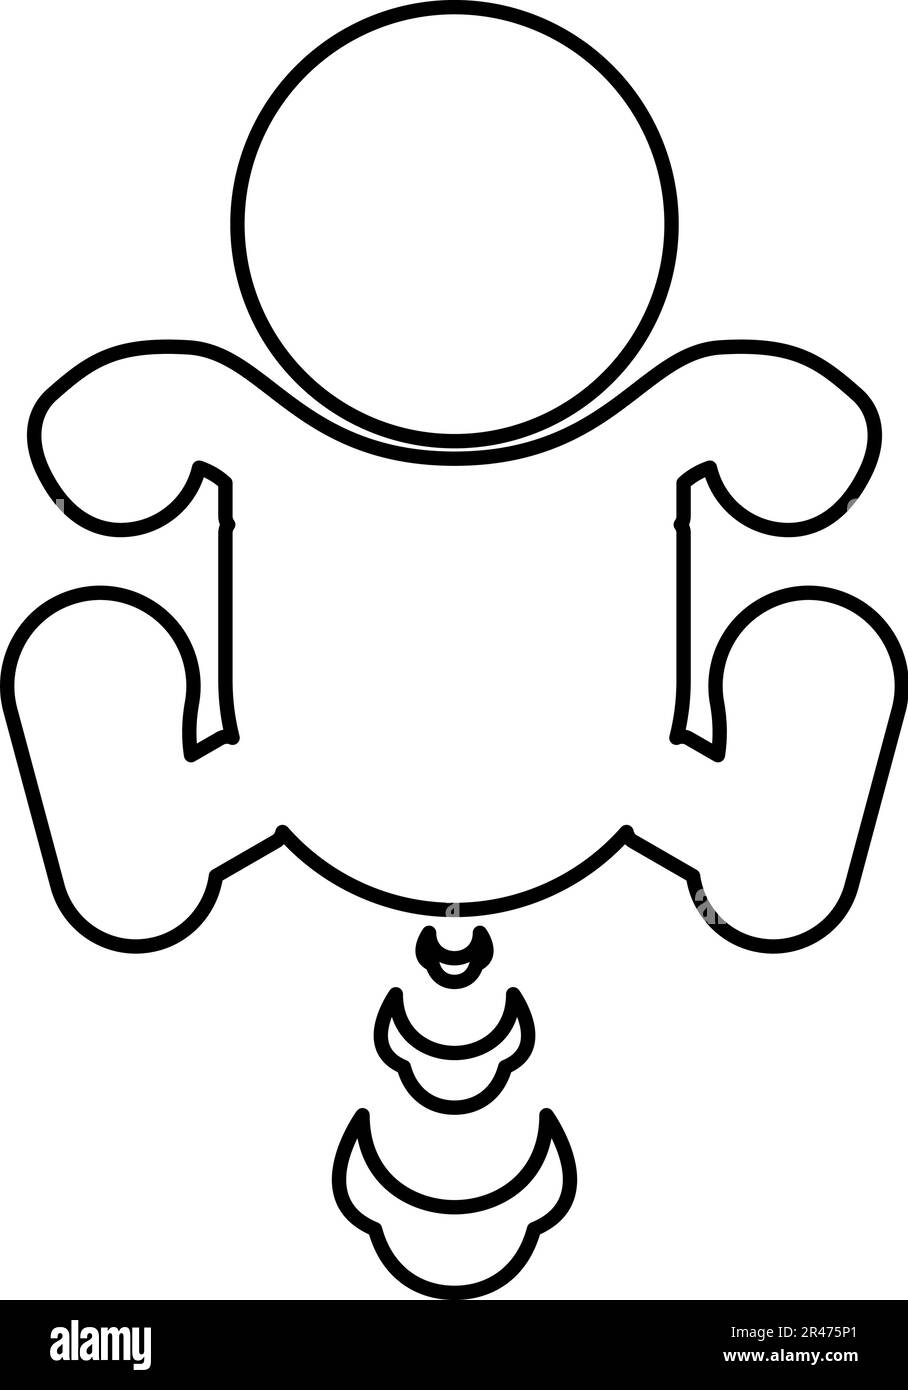 Kinderfurze Puffeln Konturliniensymbol Schwarz Farbe Vektor Illustration Bild dünn flacher Stil einfach Stock Vektor